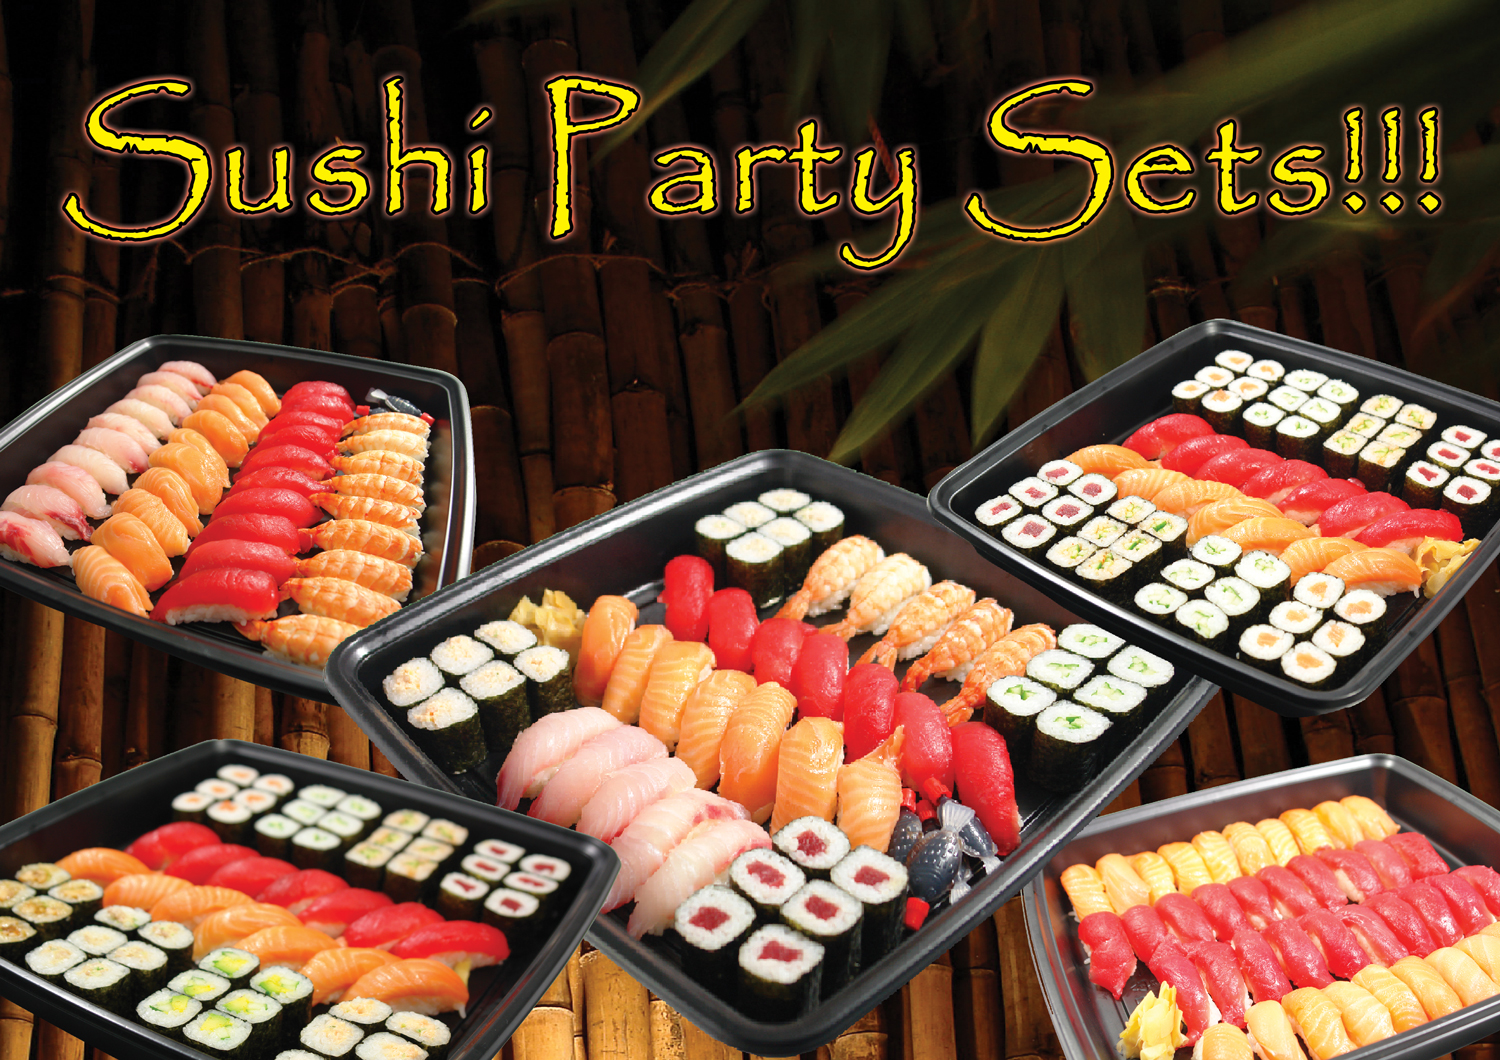 Nihonbashi Restaurants This Season Nihonbashi Presents All New Range Of Sushi Party Sets